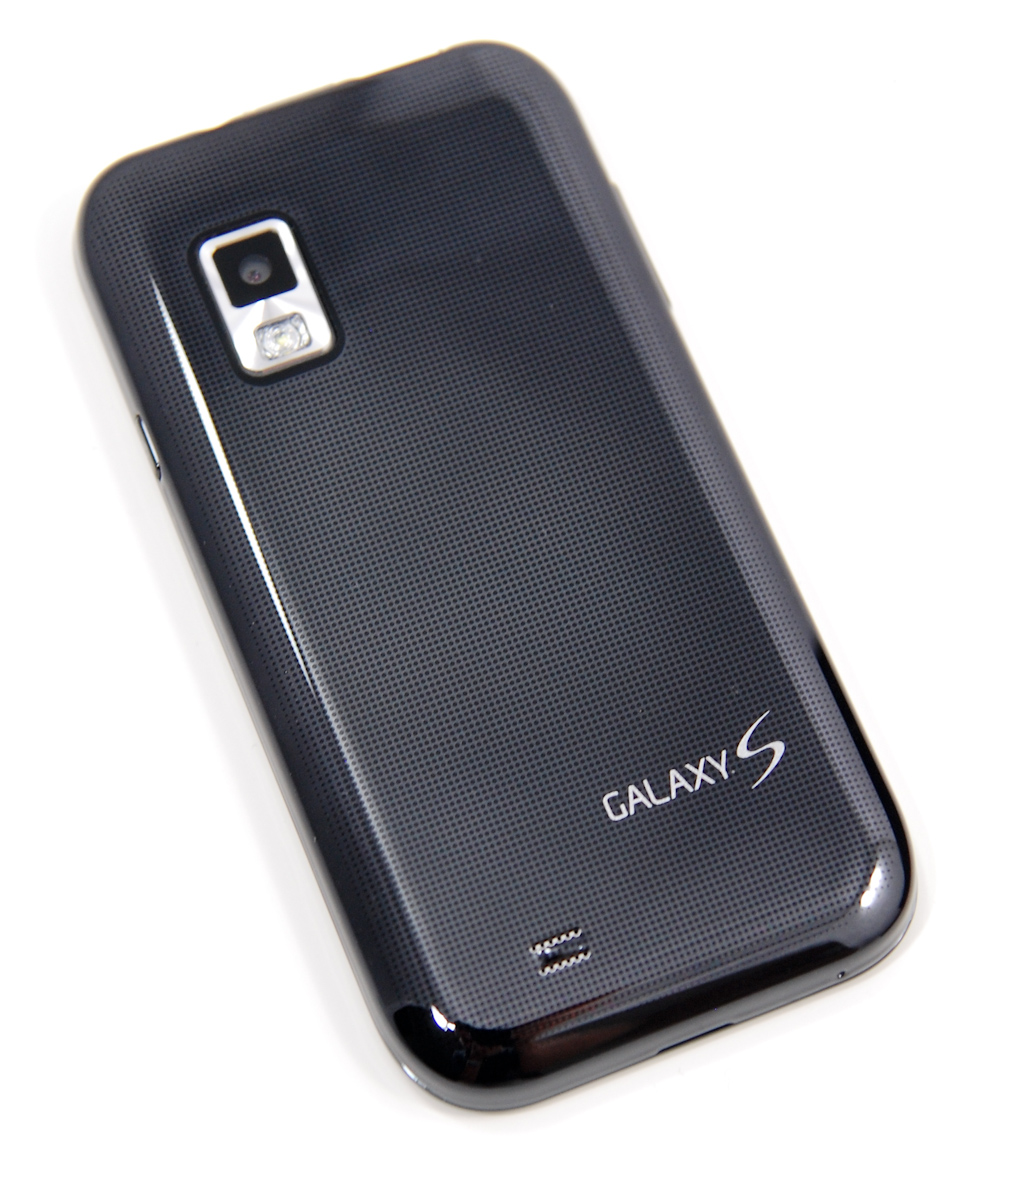 ik heb nodig Absoluut baseren Samsung Fascinate Review: Verizon's Galaxy S Smartphone